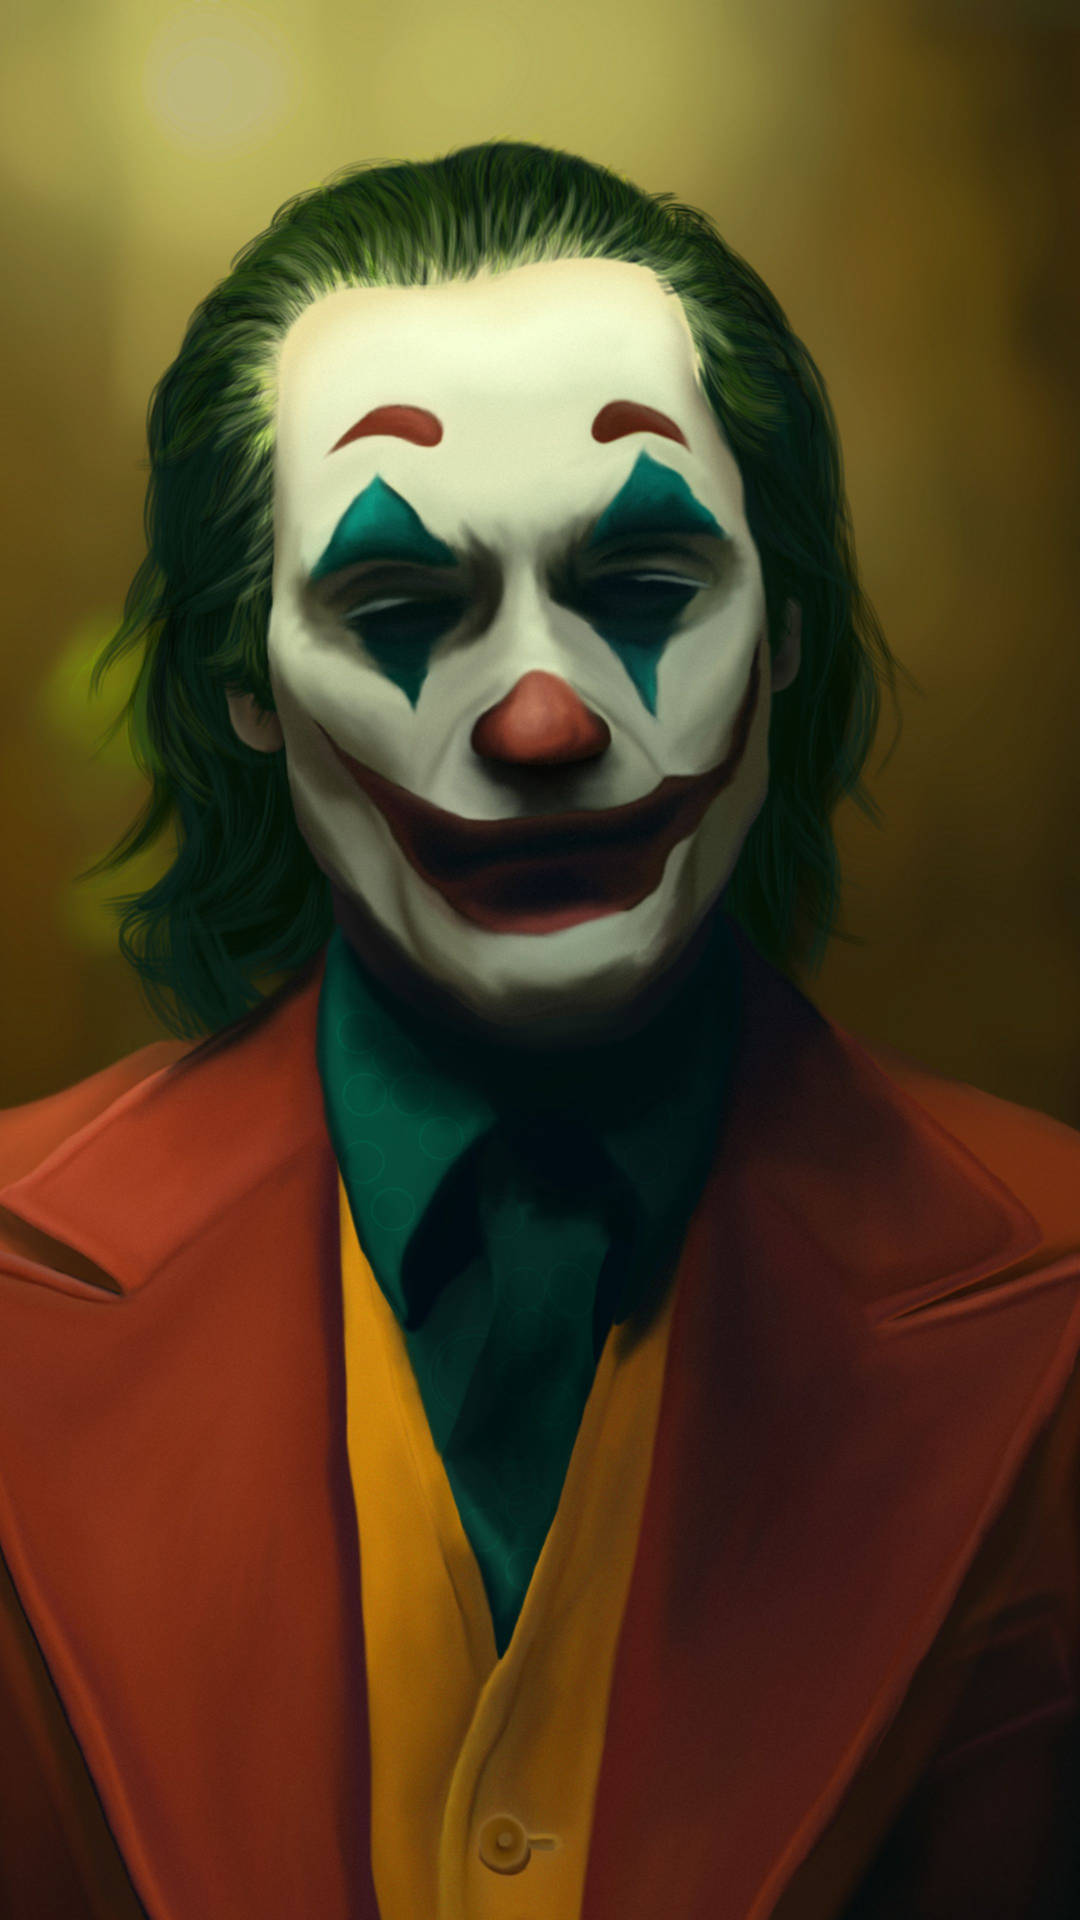 Dark Mystique Of Gotham City - Joker Iphone Wallpaper Background